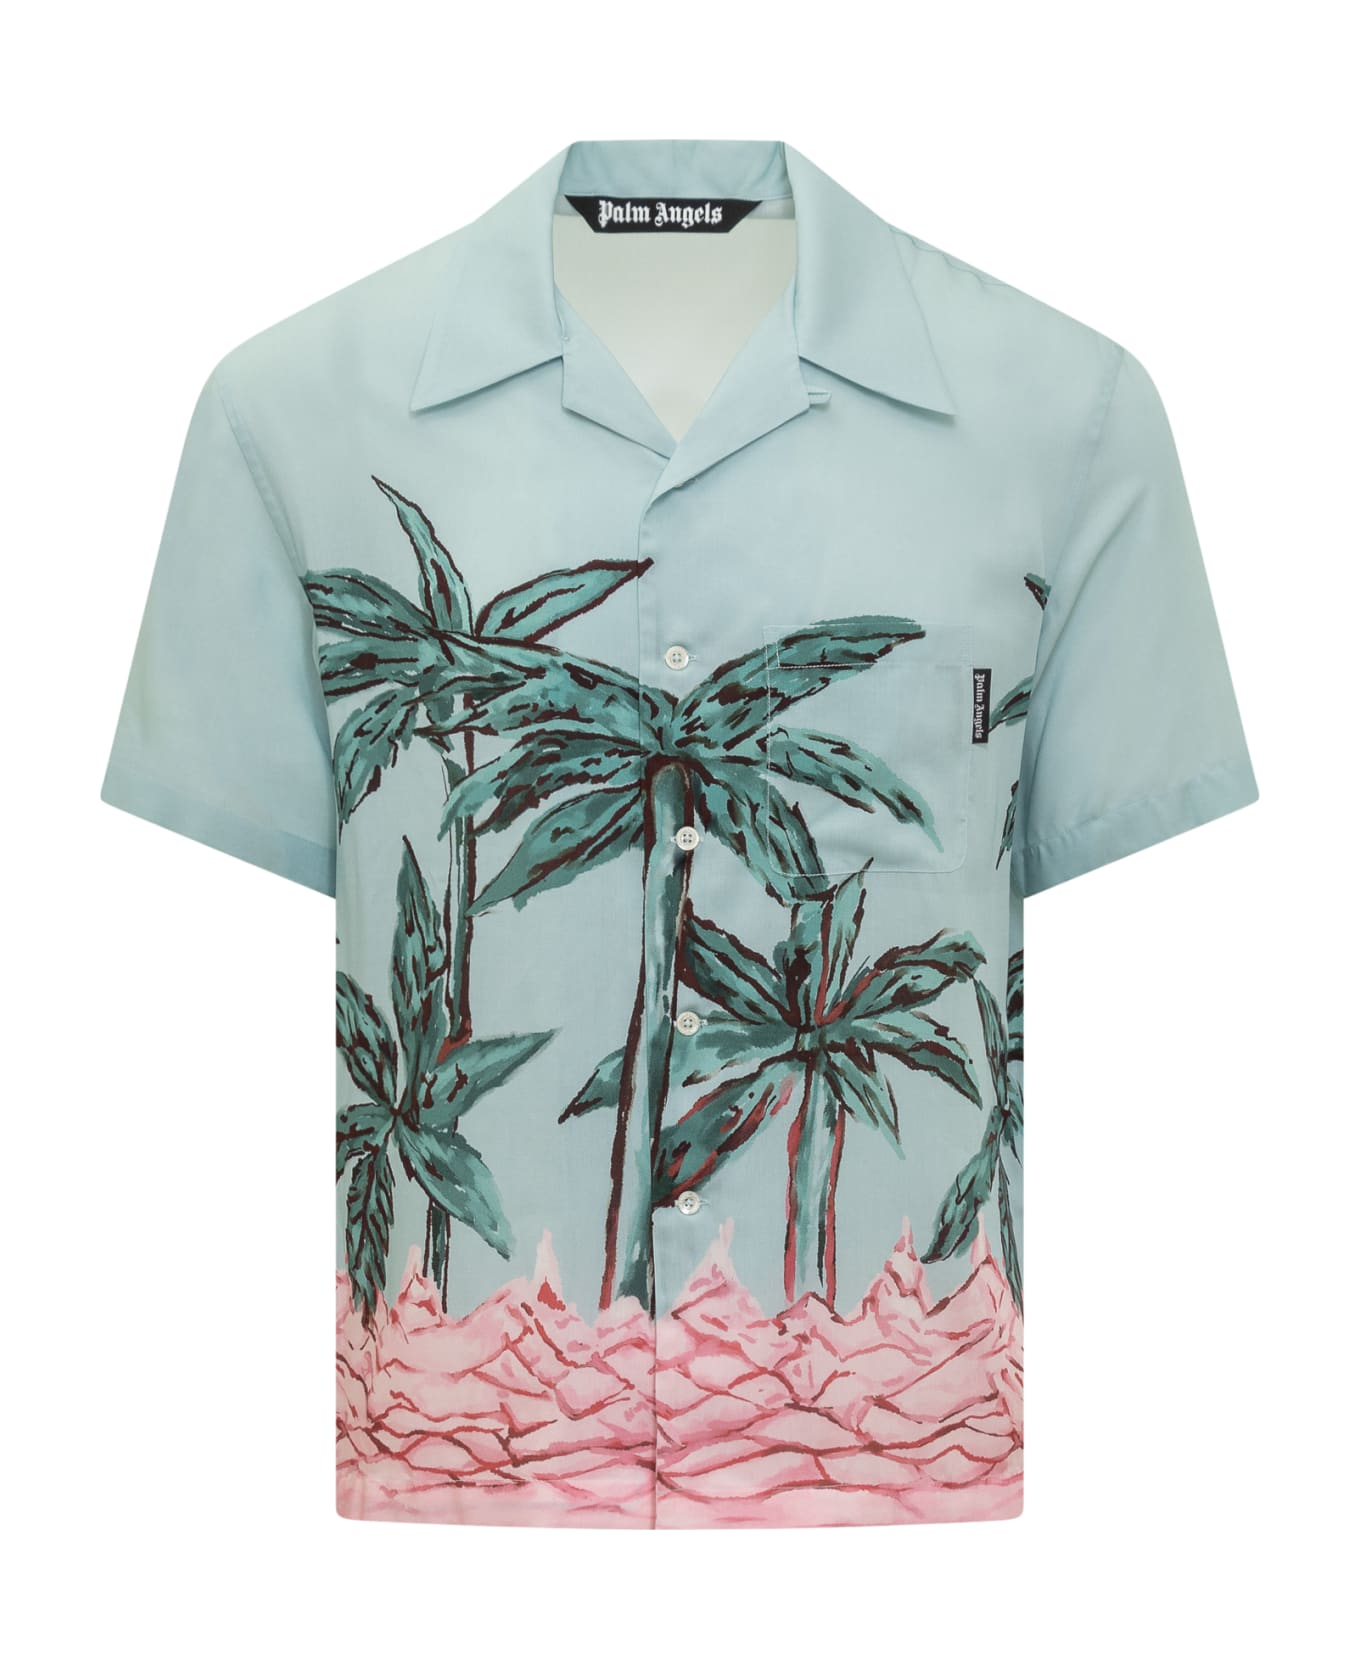 Palm Angels Palm Trees Bowling Shirt - LIGHT BLUE